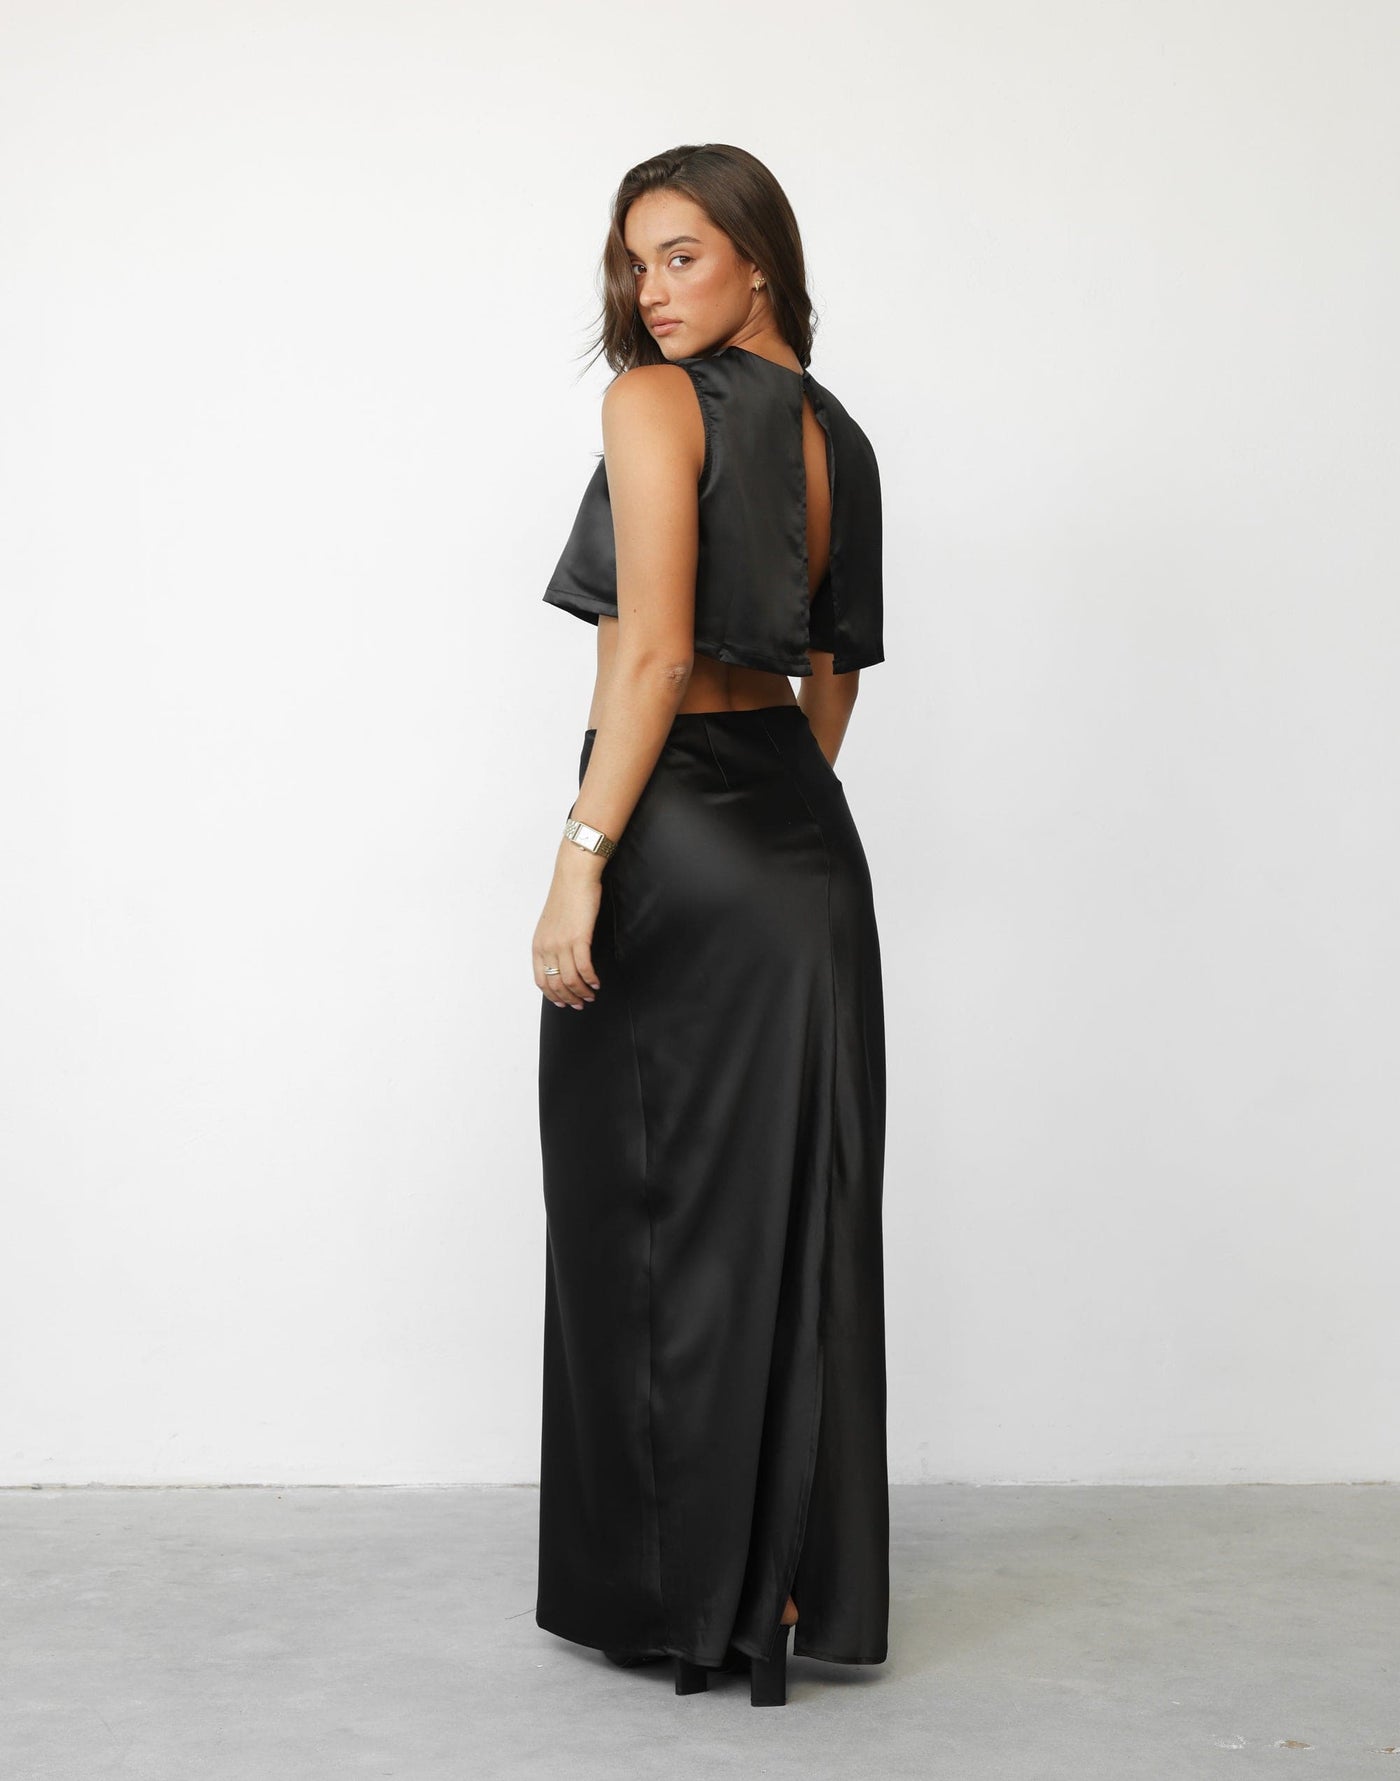 Sincerity Maxi Skirt (Black) - Black Satin High Waisted Skirt - Women's Skirt - Charcoal Clothing